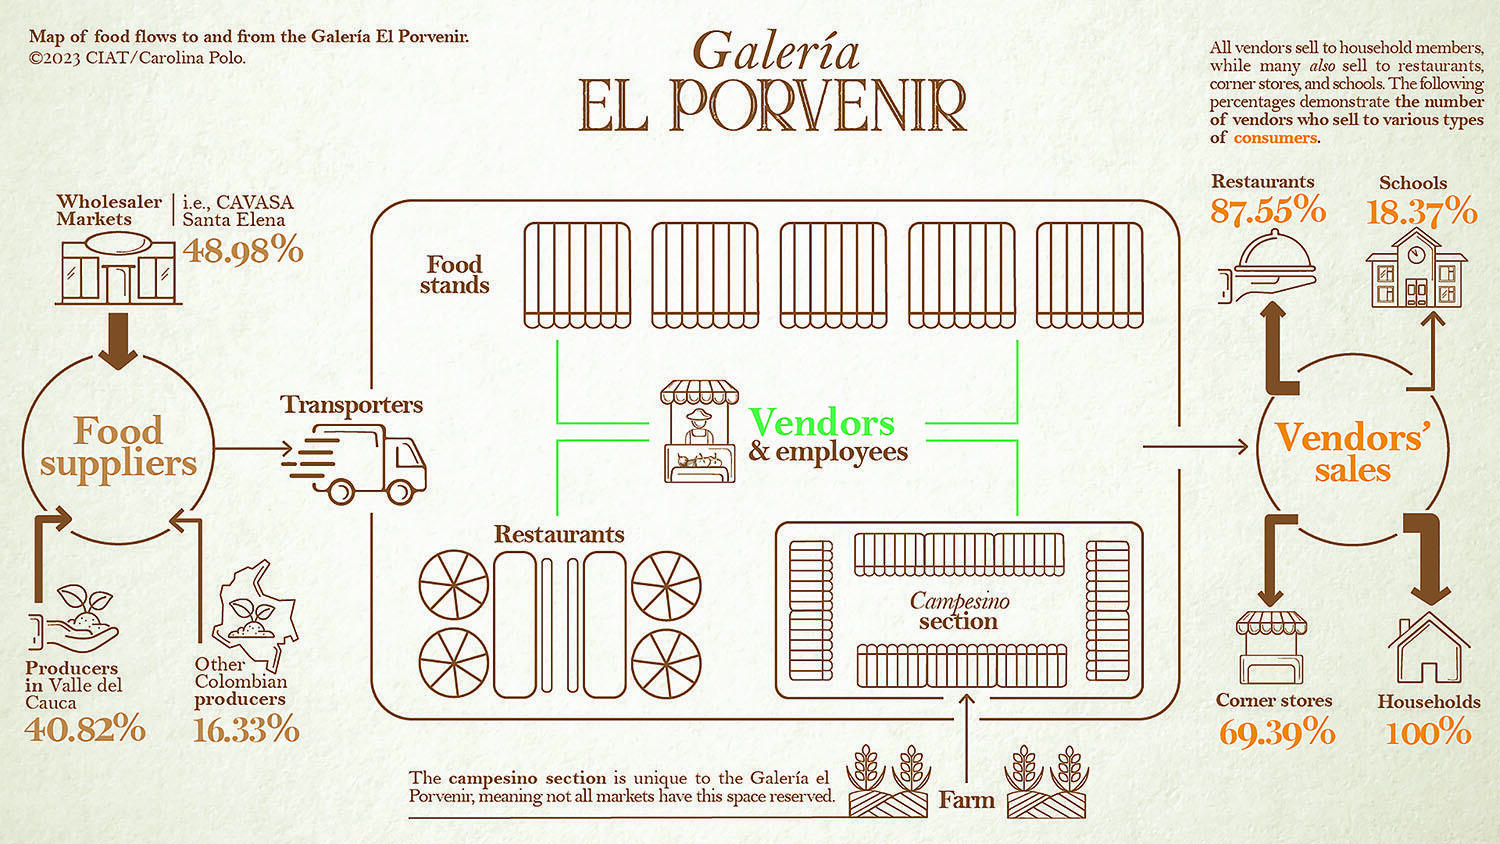 Map of food flows to and from the Galería El Porvenir. (Image © CIAT/Carolina Polo.)